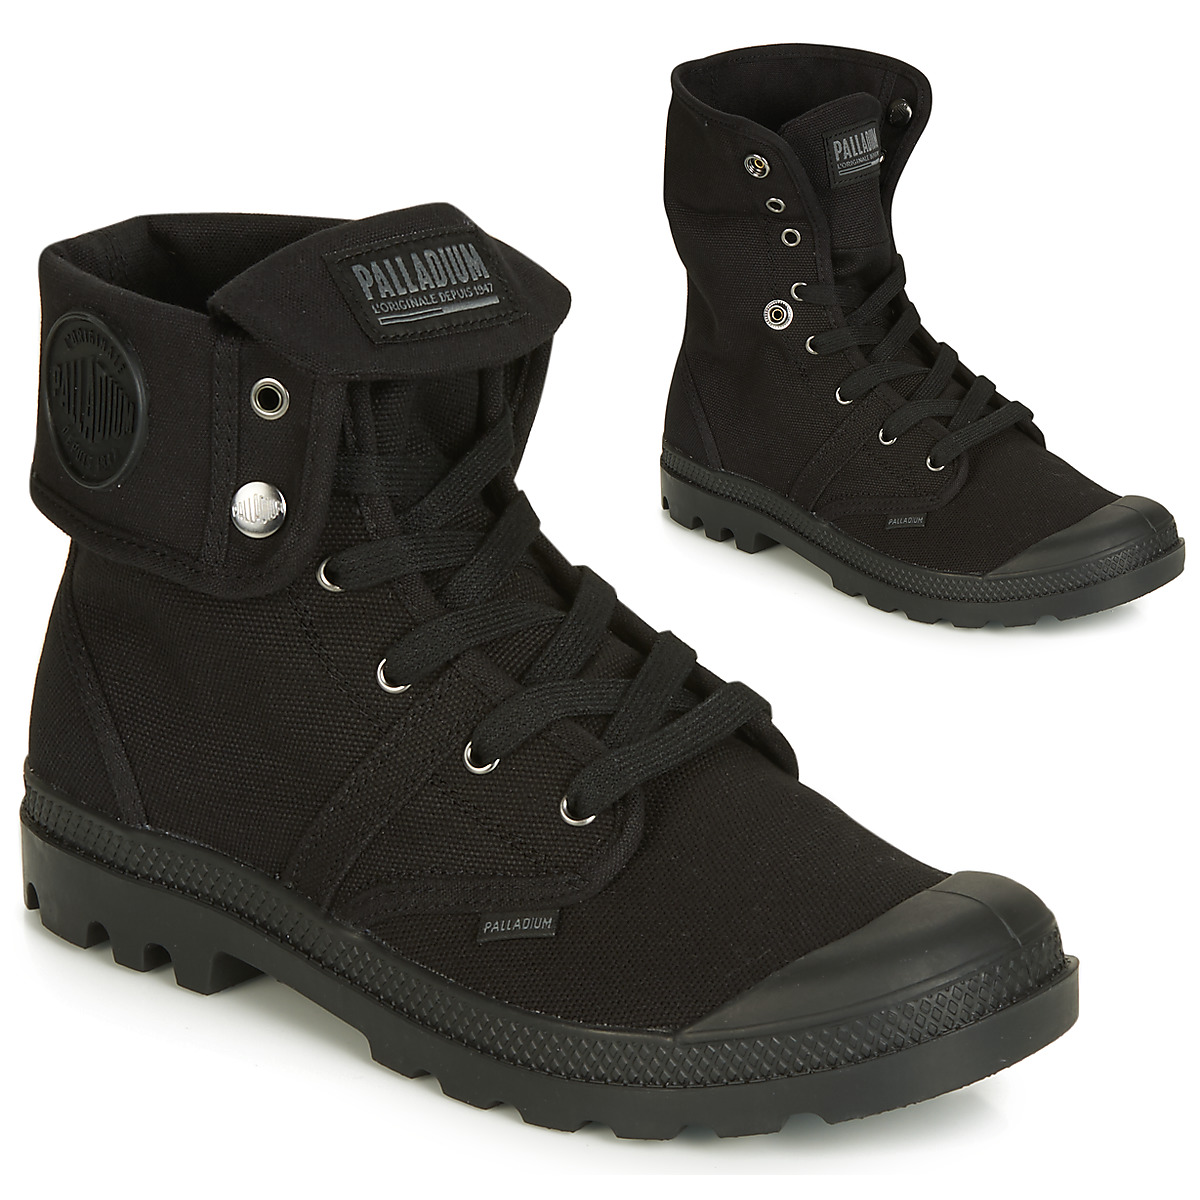 Palladium PALLABROUSE BAGGY Noir - Chaussures Boot Homme 89,00 €